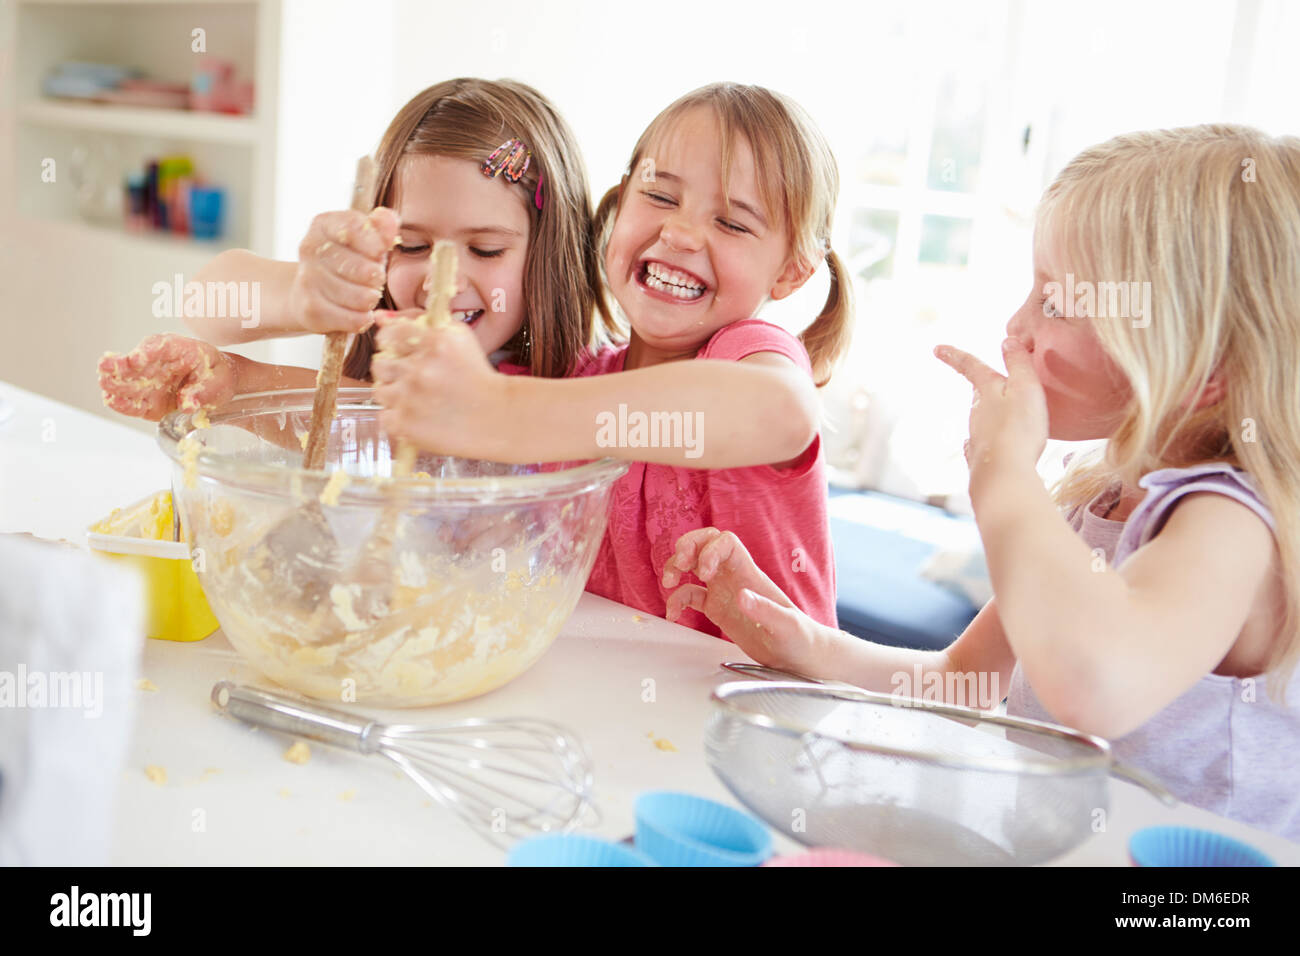 Three Girls Making Cupcakes In Kitchen Stock Photo